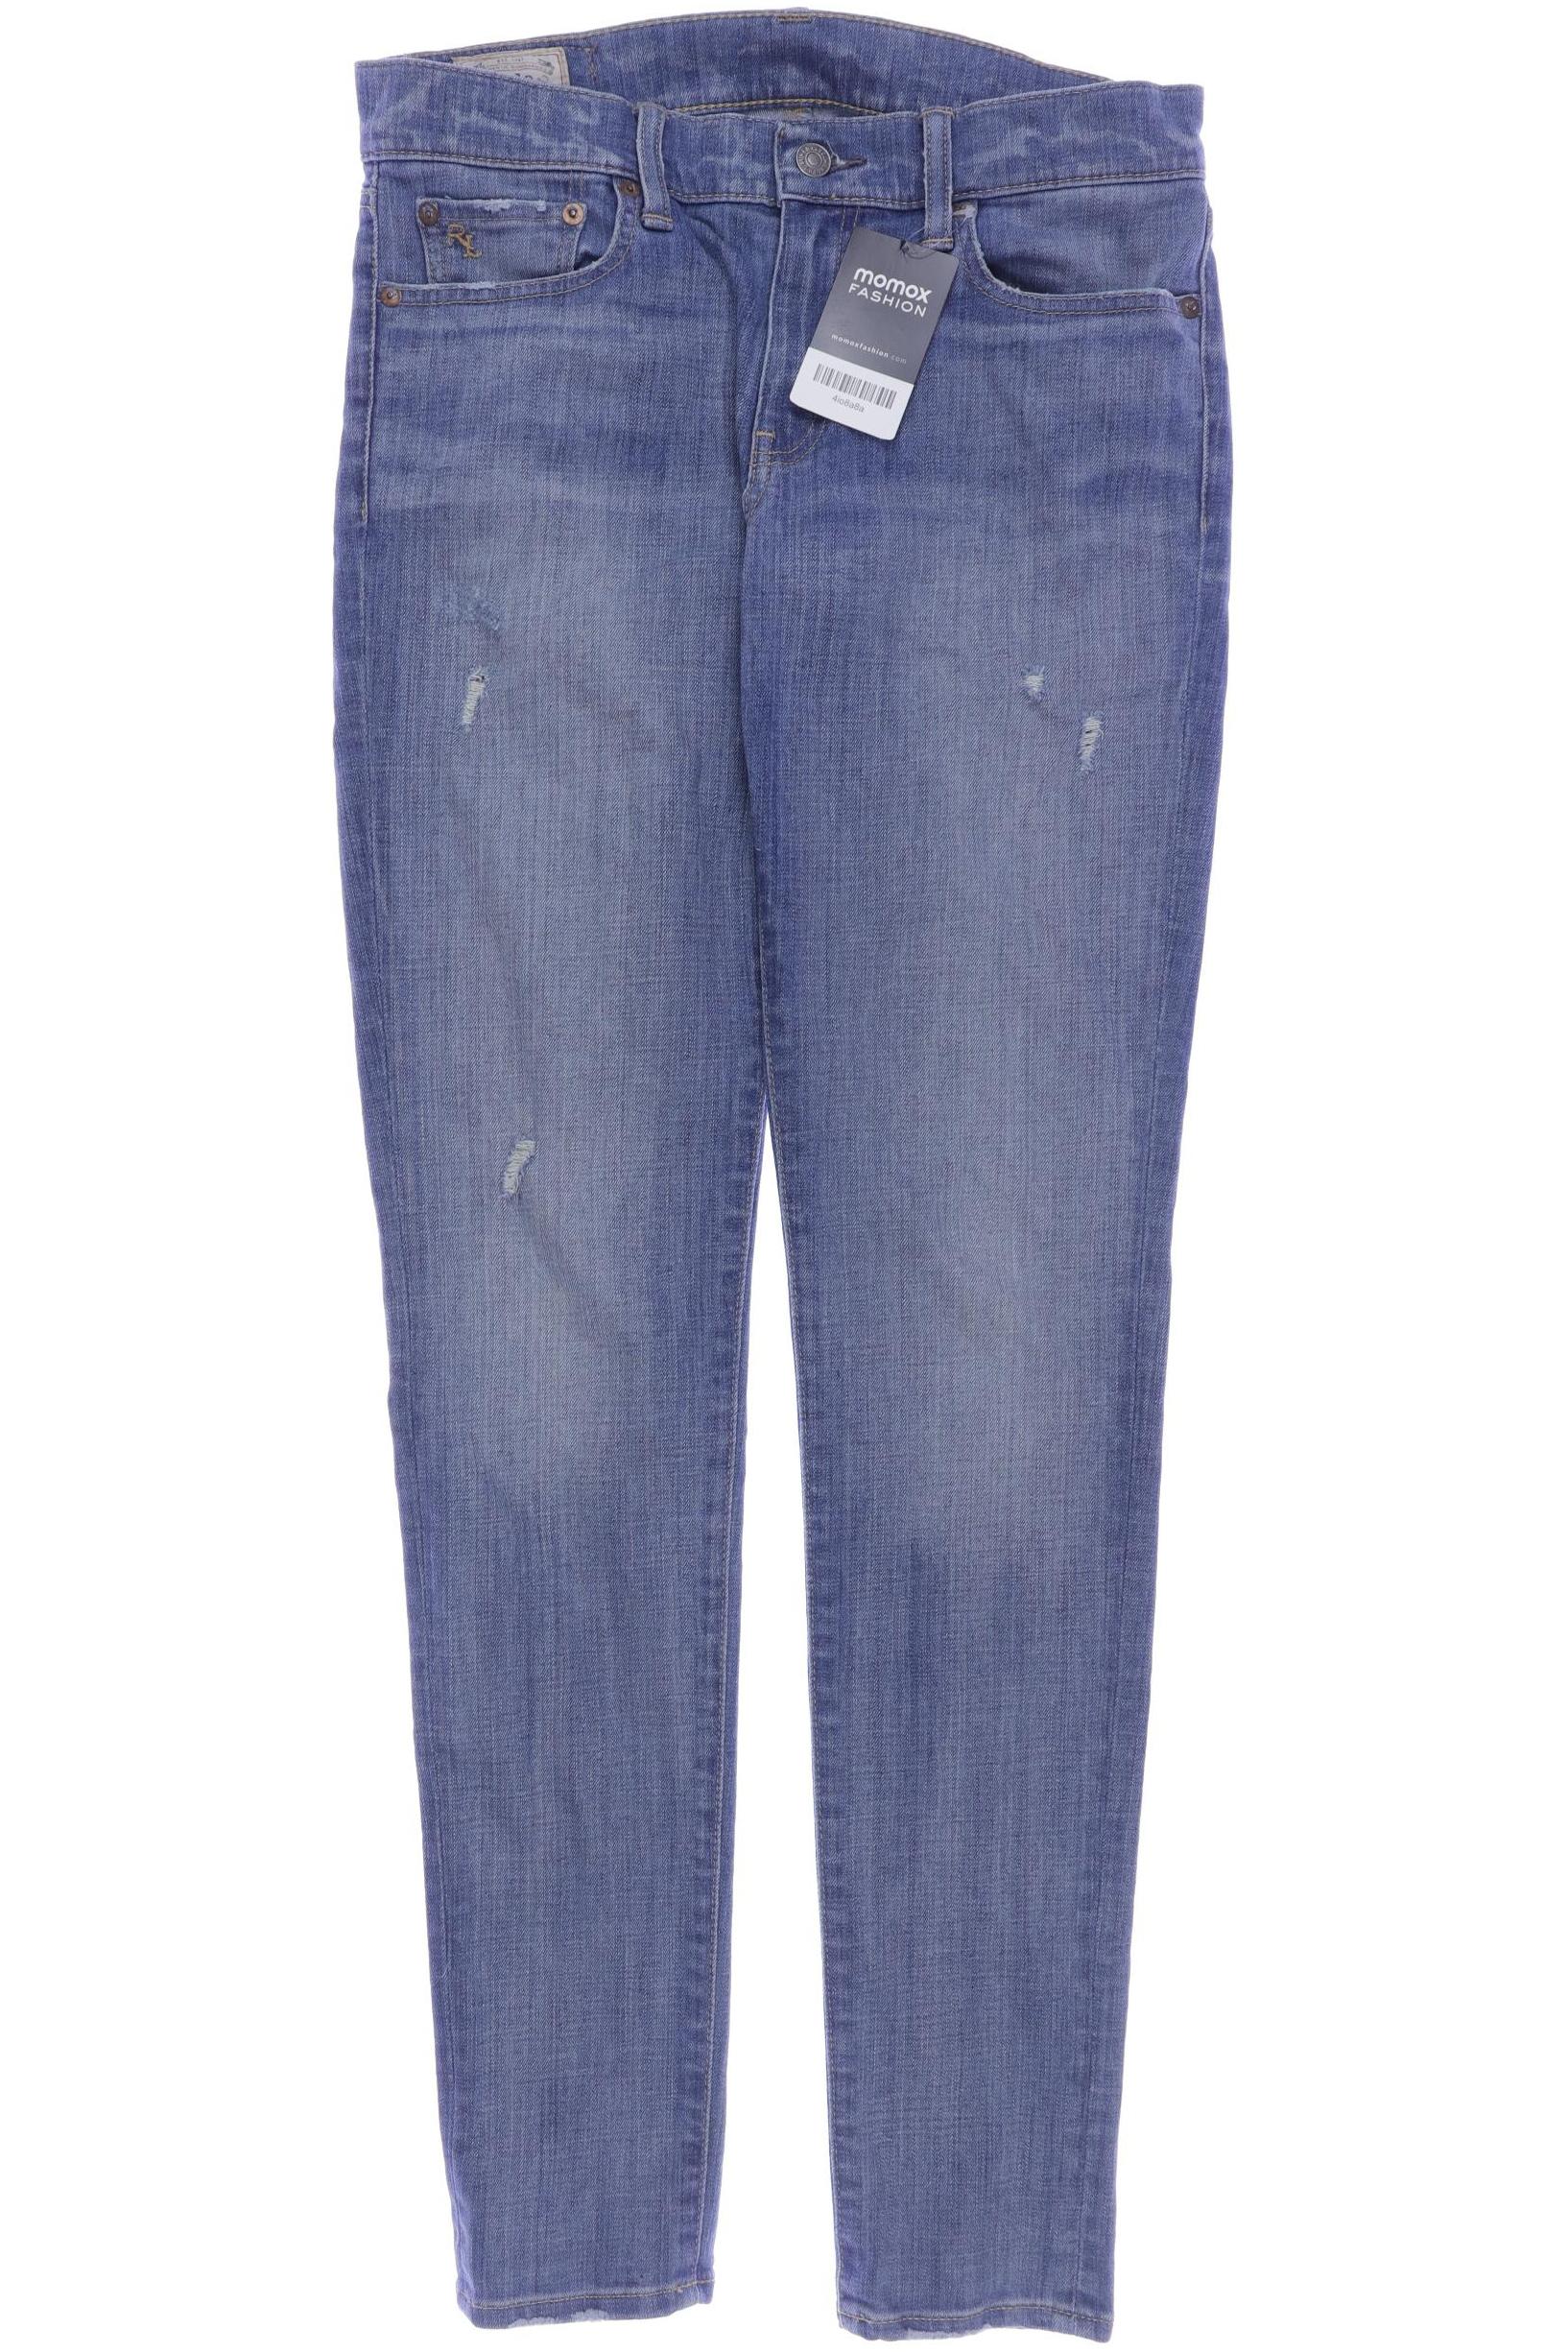 Polo Ralph Lauren Damen Jeans, blau, Gr. 42 von Polo Ralph Lauren